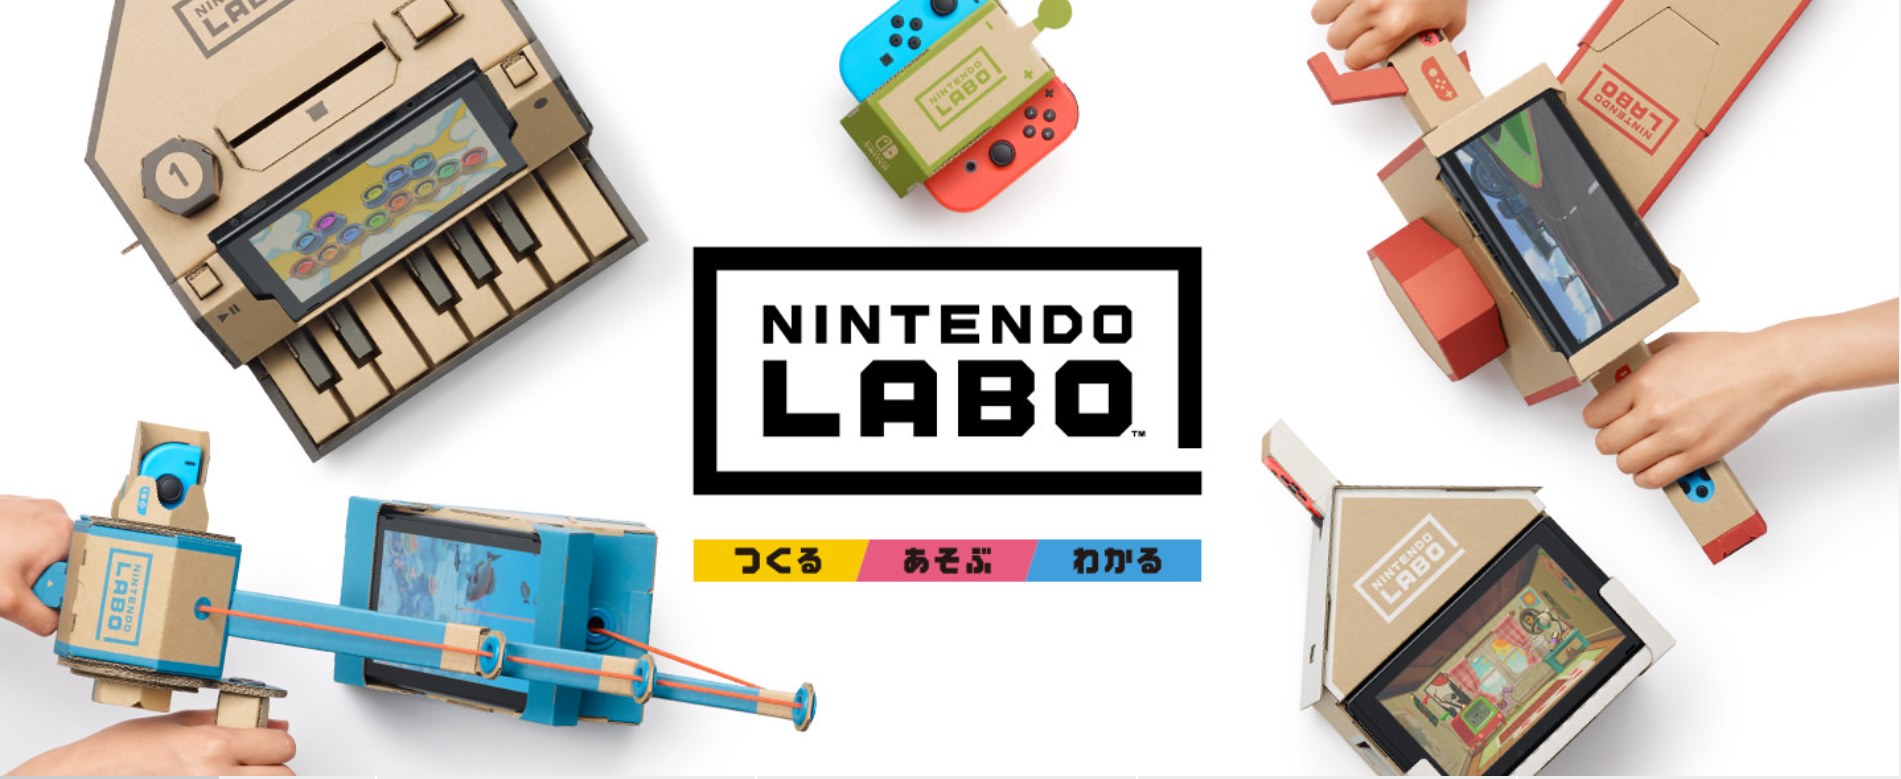 【UPDATE】任天堂の新商品「Nintendo Labo」は、ソフトのバラ